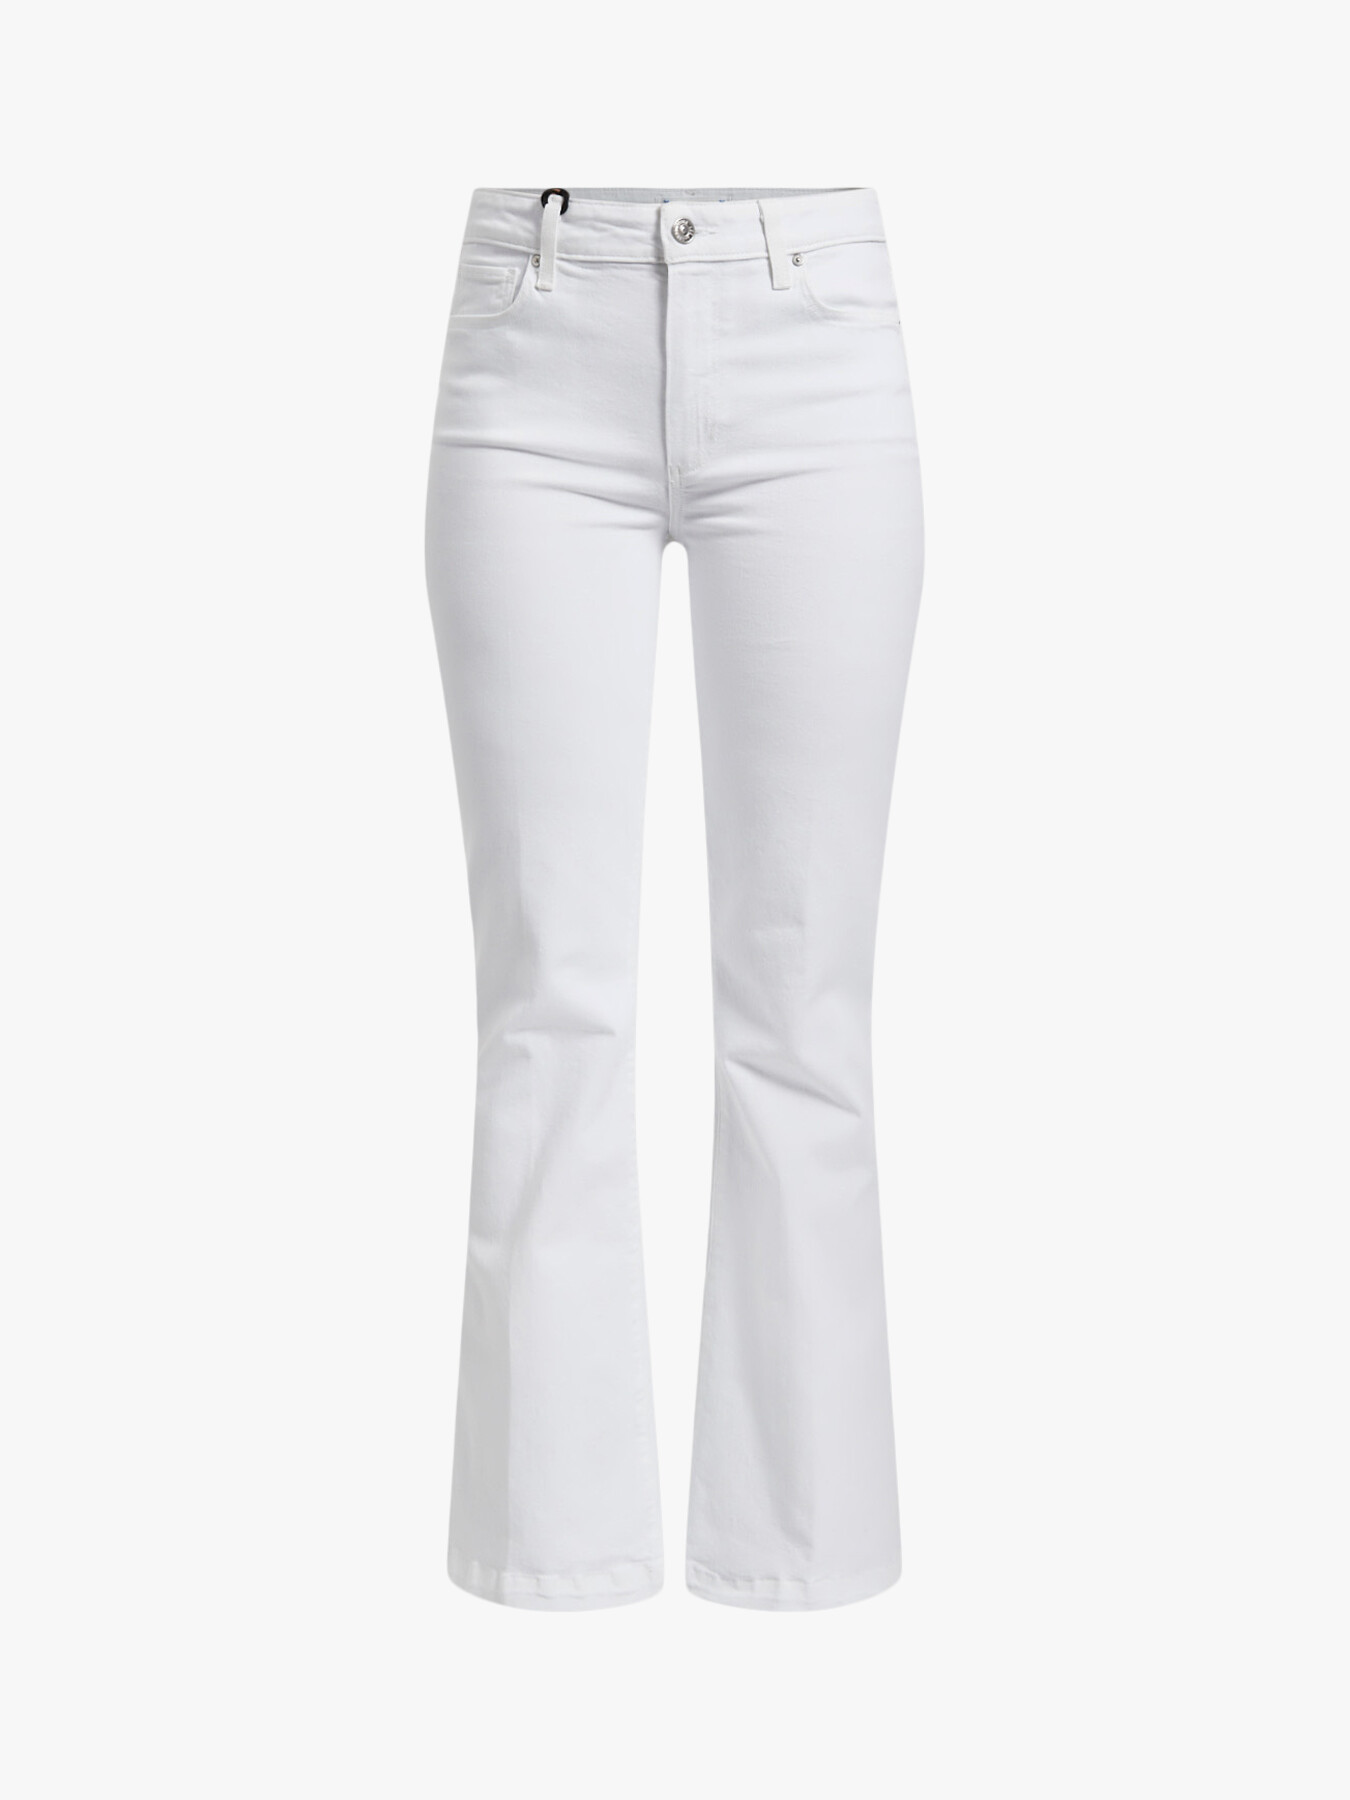 Shop Paige Jeans Online  White Brigitte Boyfriend Jeans  ricardacom   RICARDA